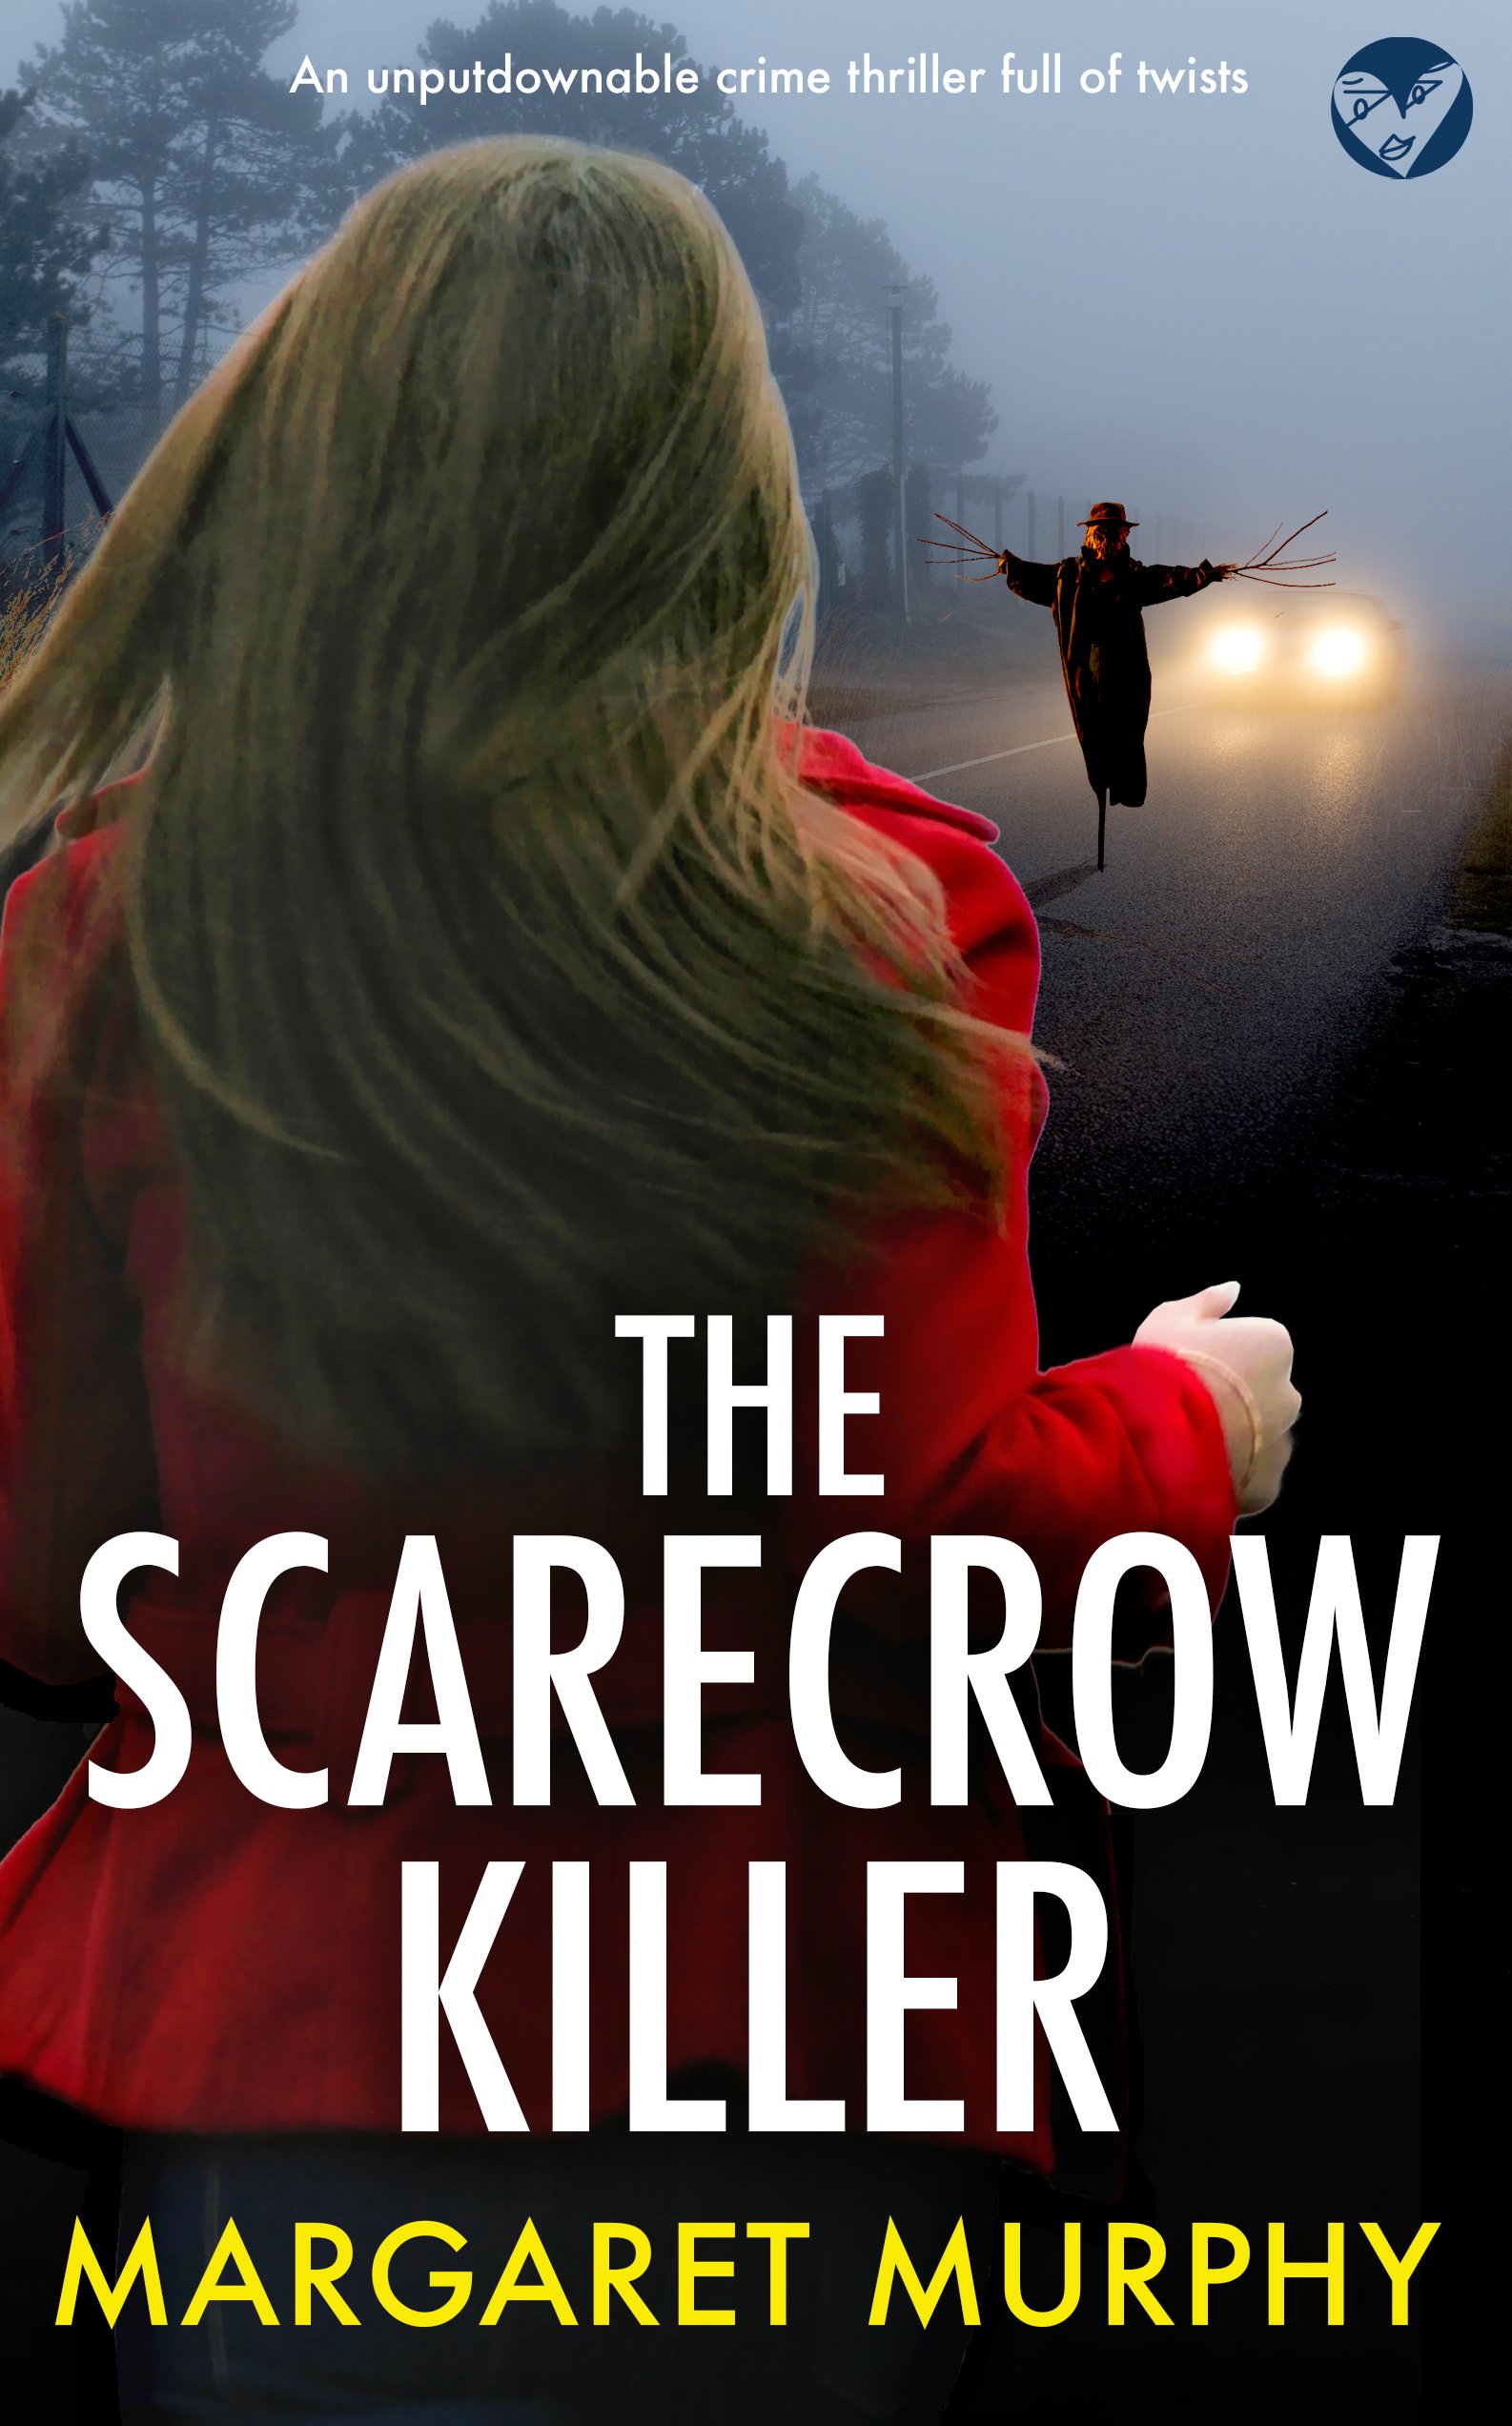 THE SCARECROW KILLER Publish cover (2).jpg